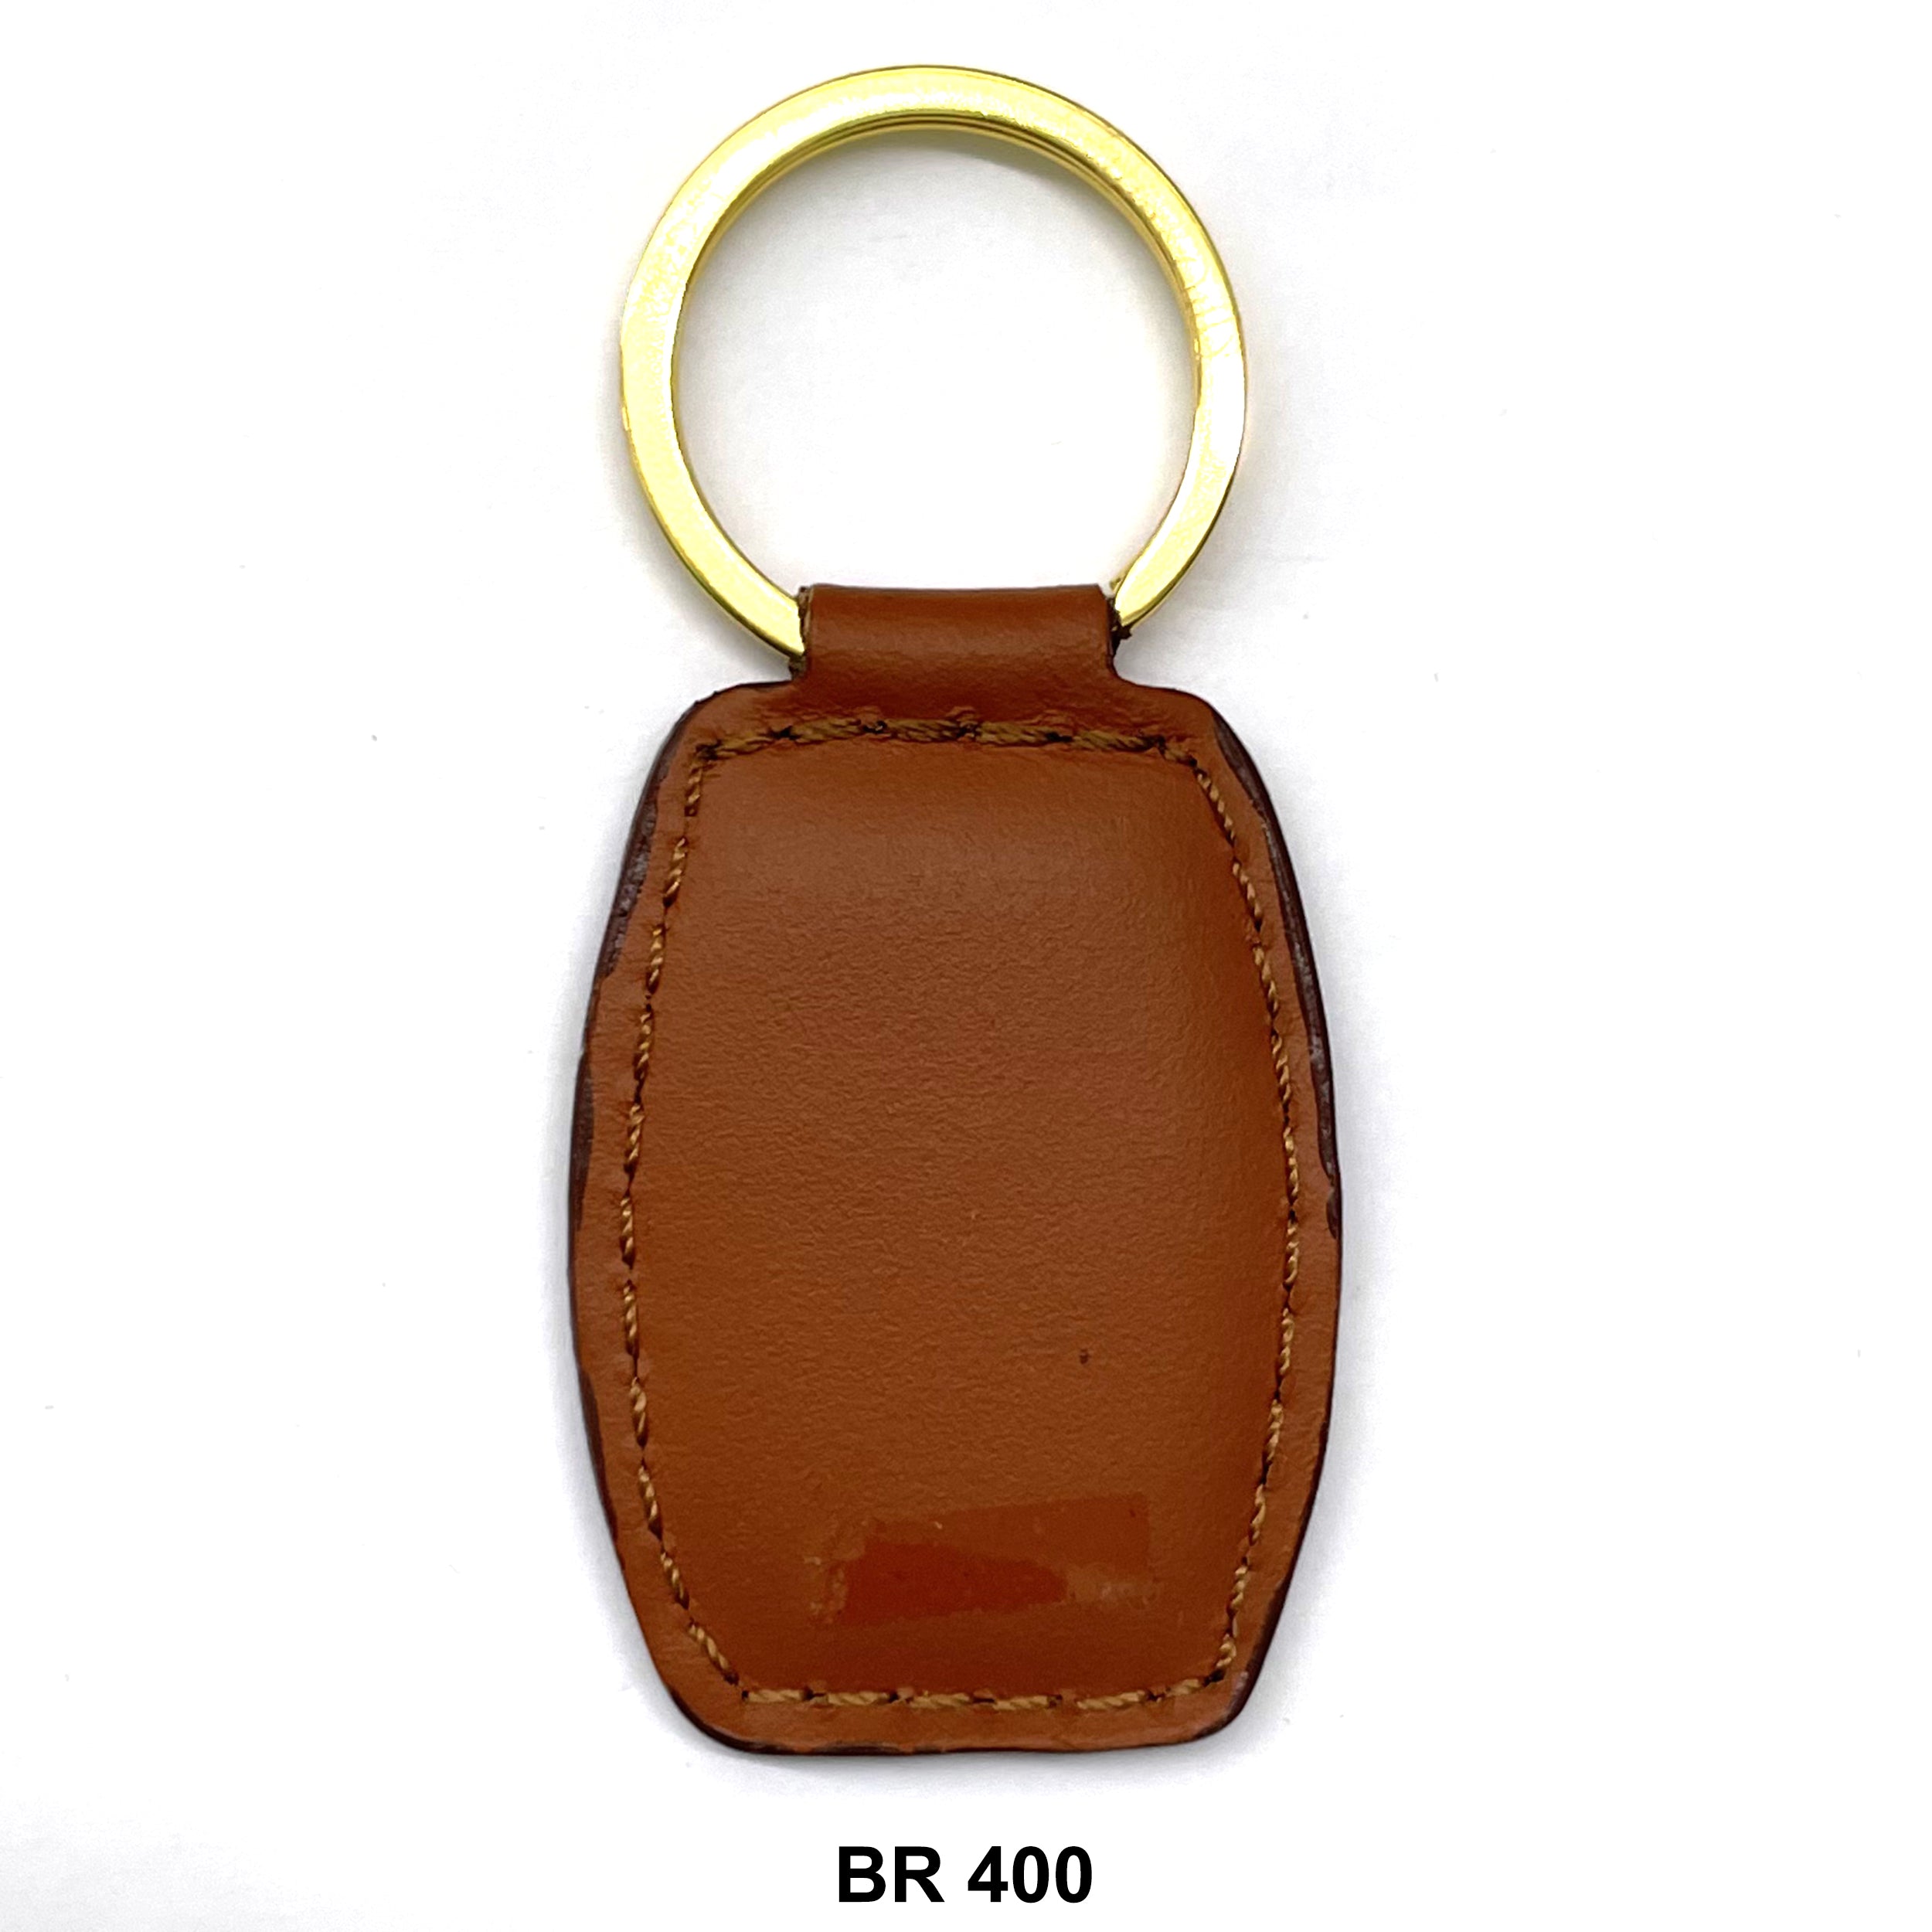 P U Leather Keychain BR 400